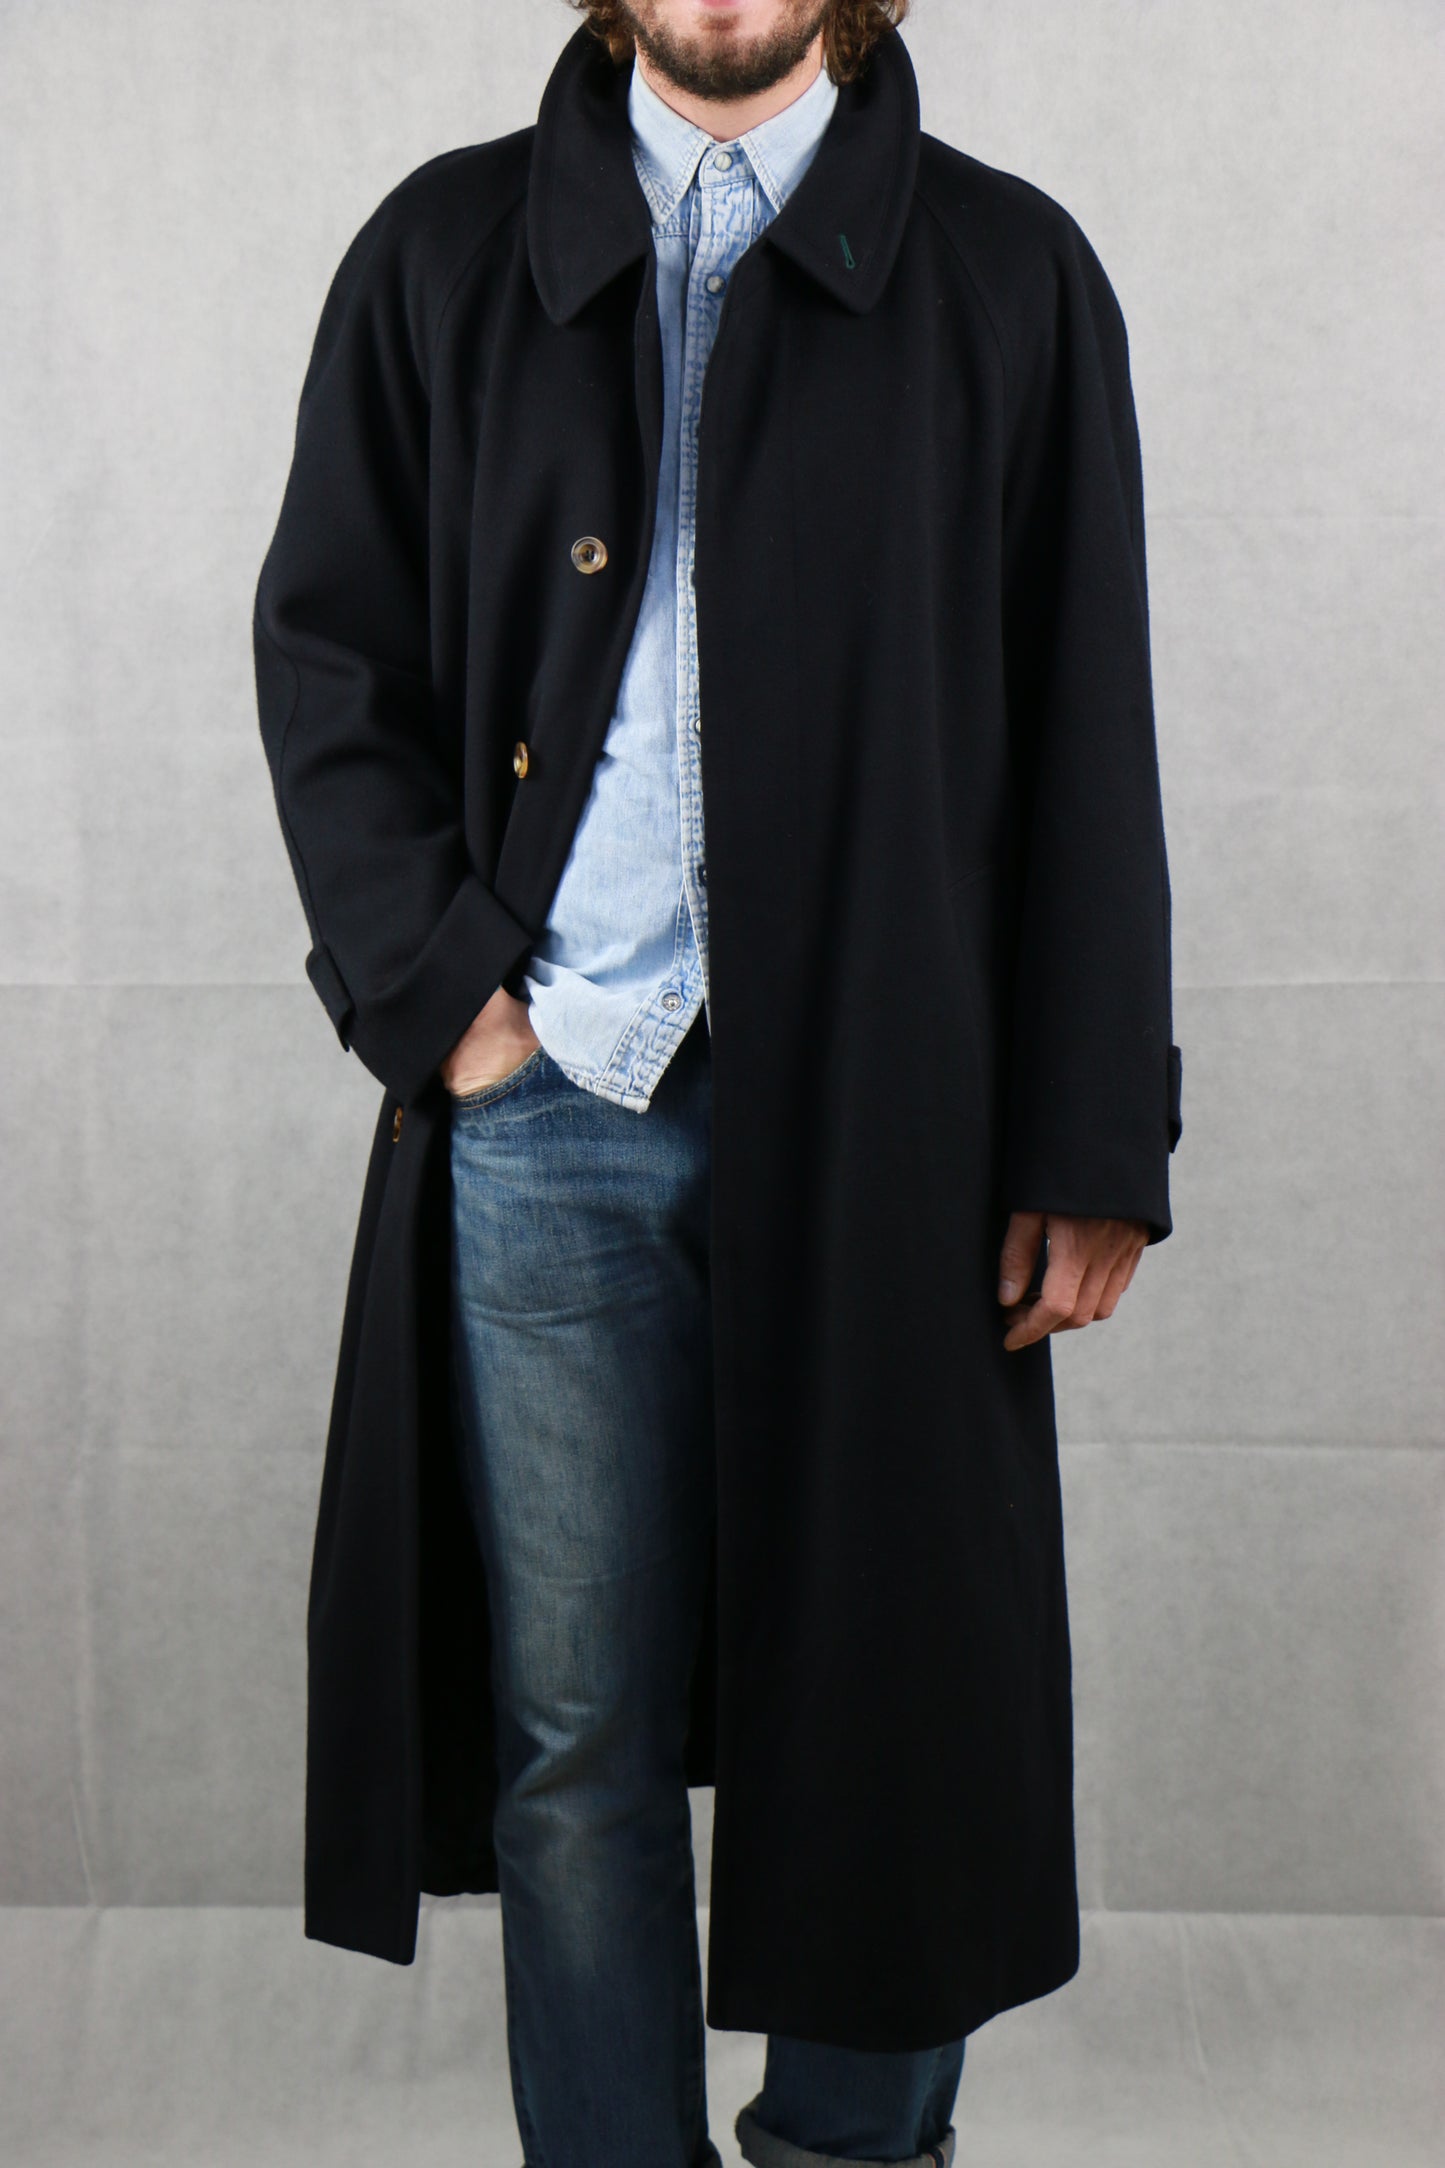 Yves Saint Laurent Coat, clochard92.com